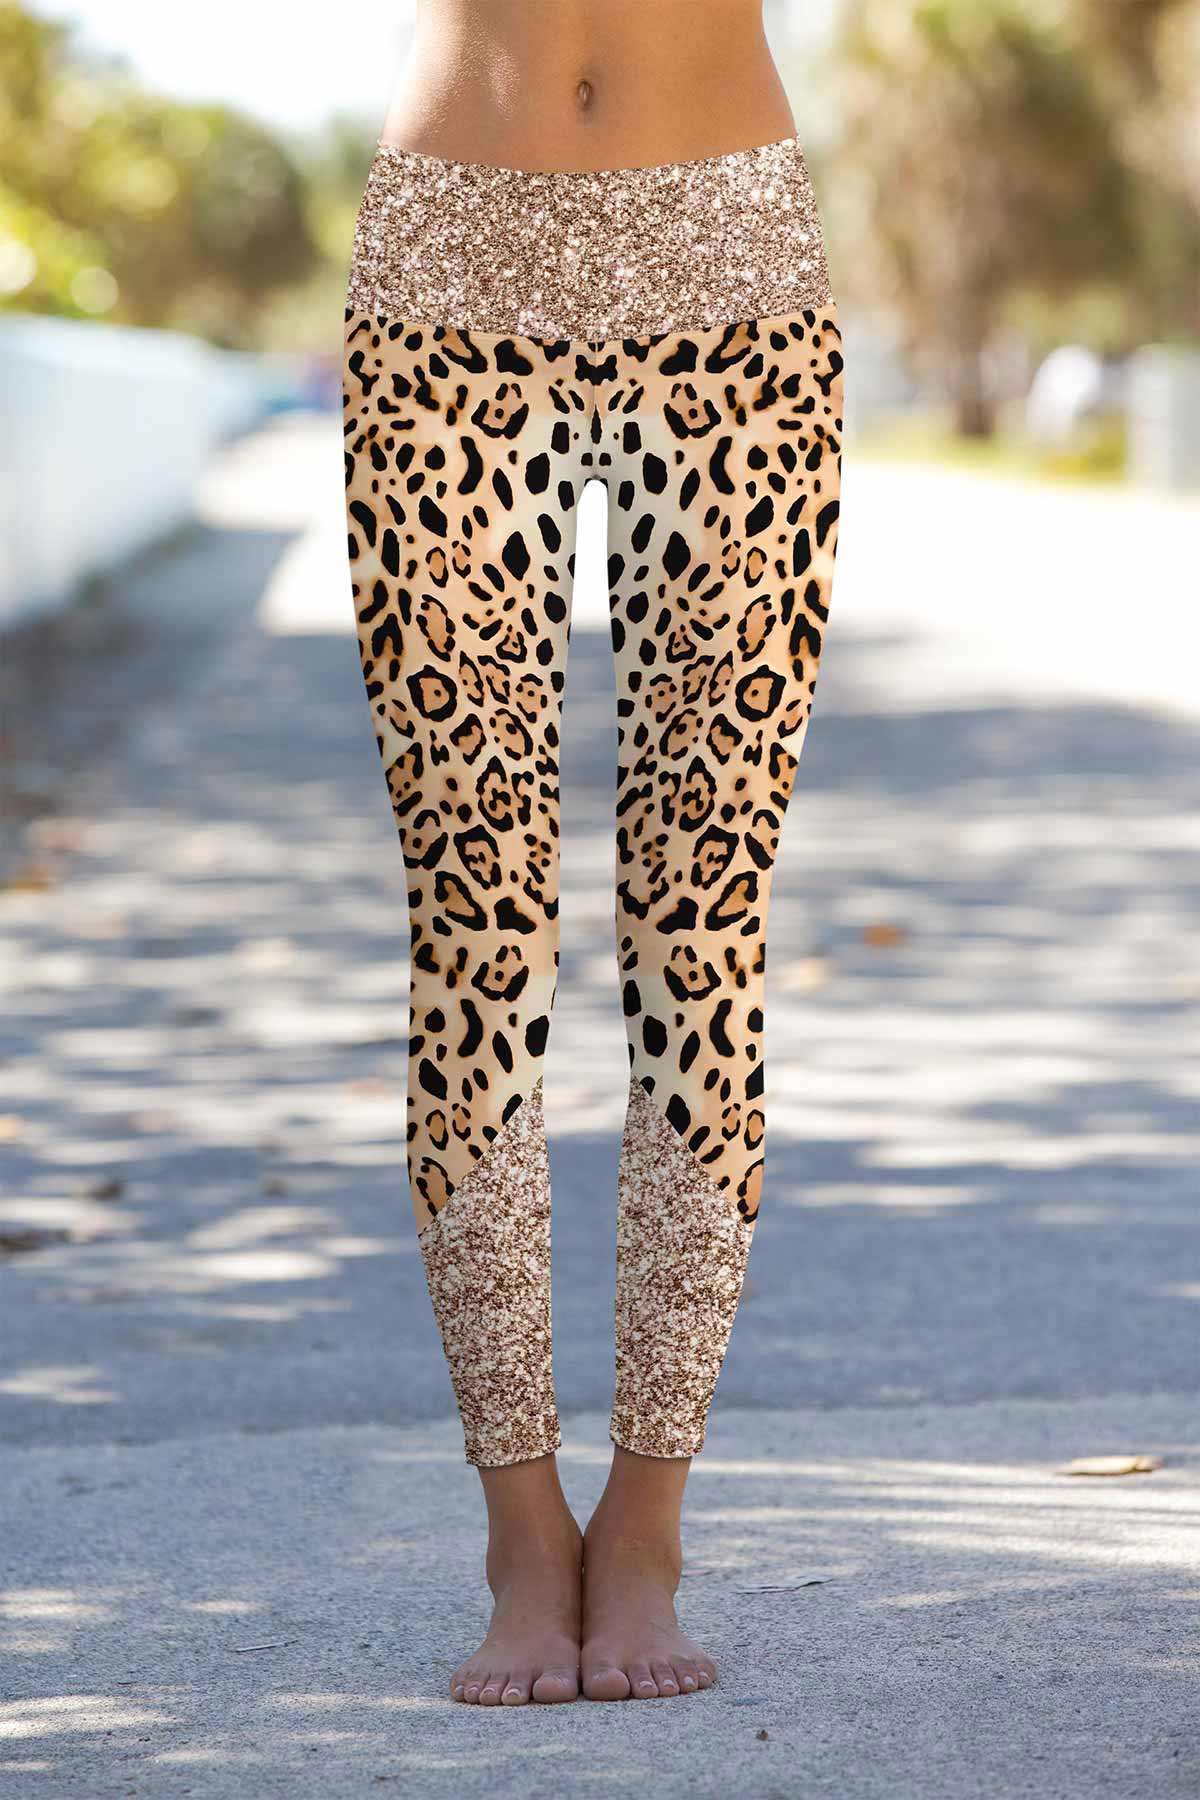 SEMI-ANNUAL SALE! Let's Go Wild Lucy Brown Gold Animal Print Leggings Yoga Pants - Women - Pineapple Clothing